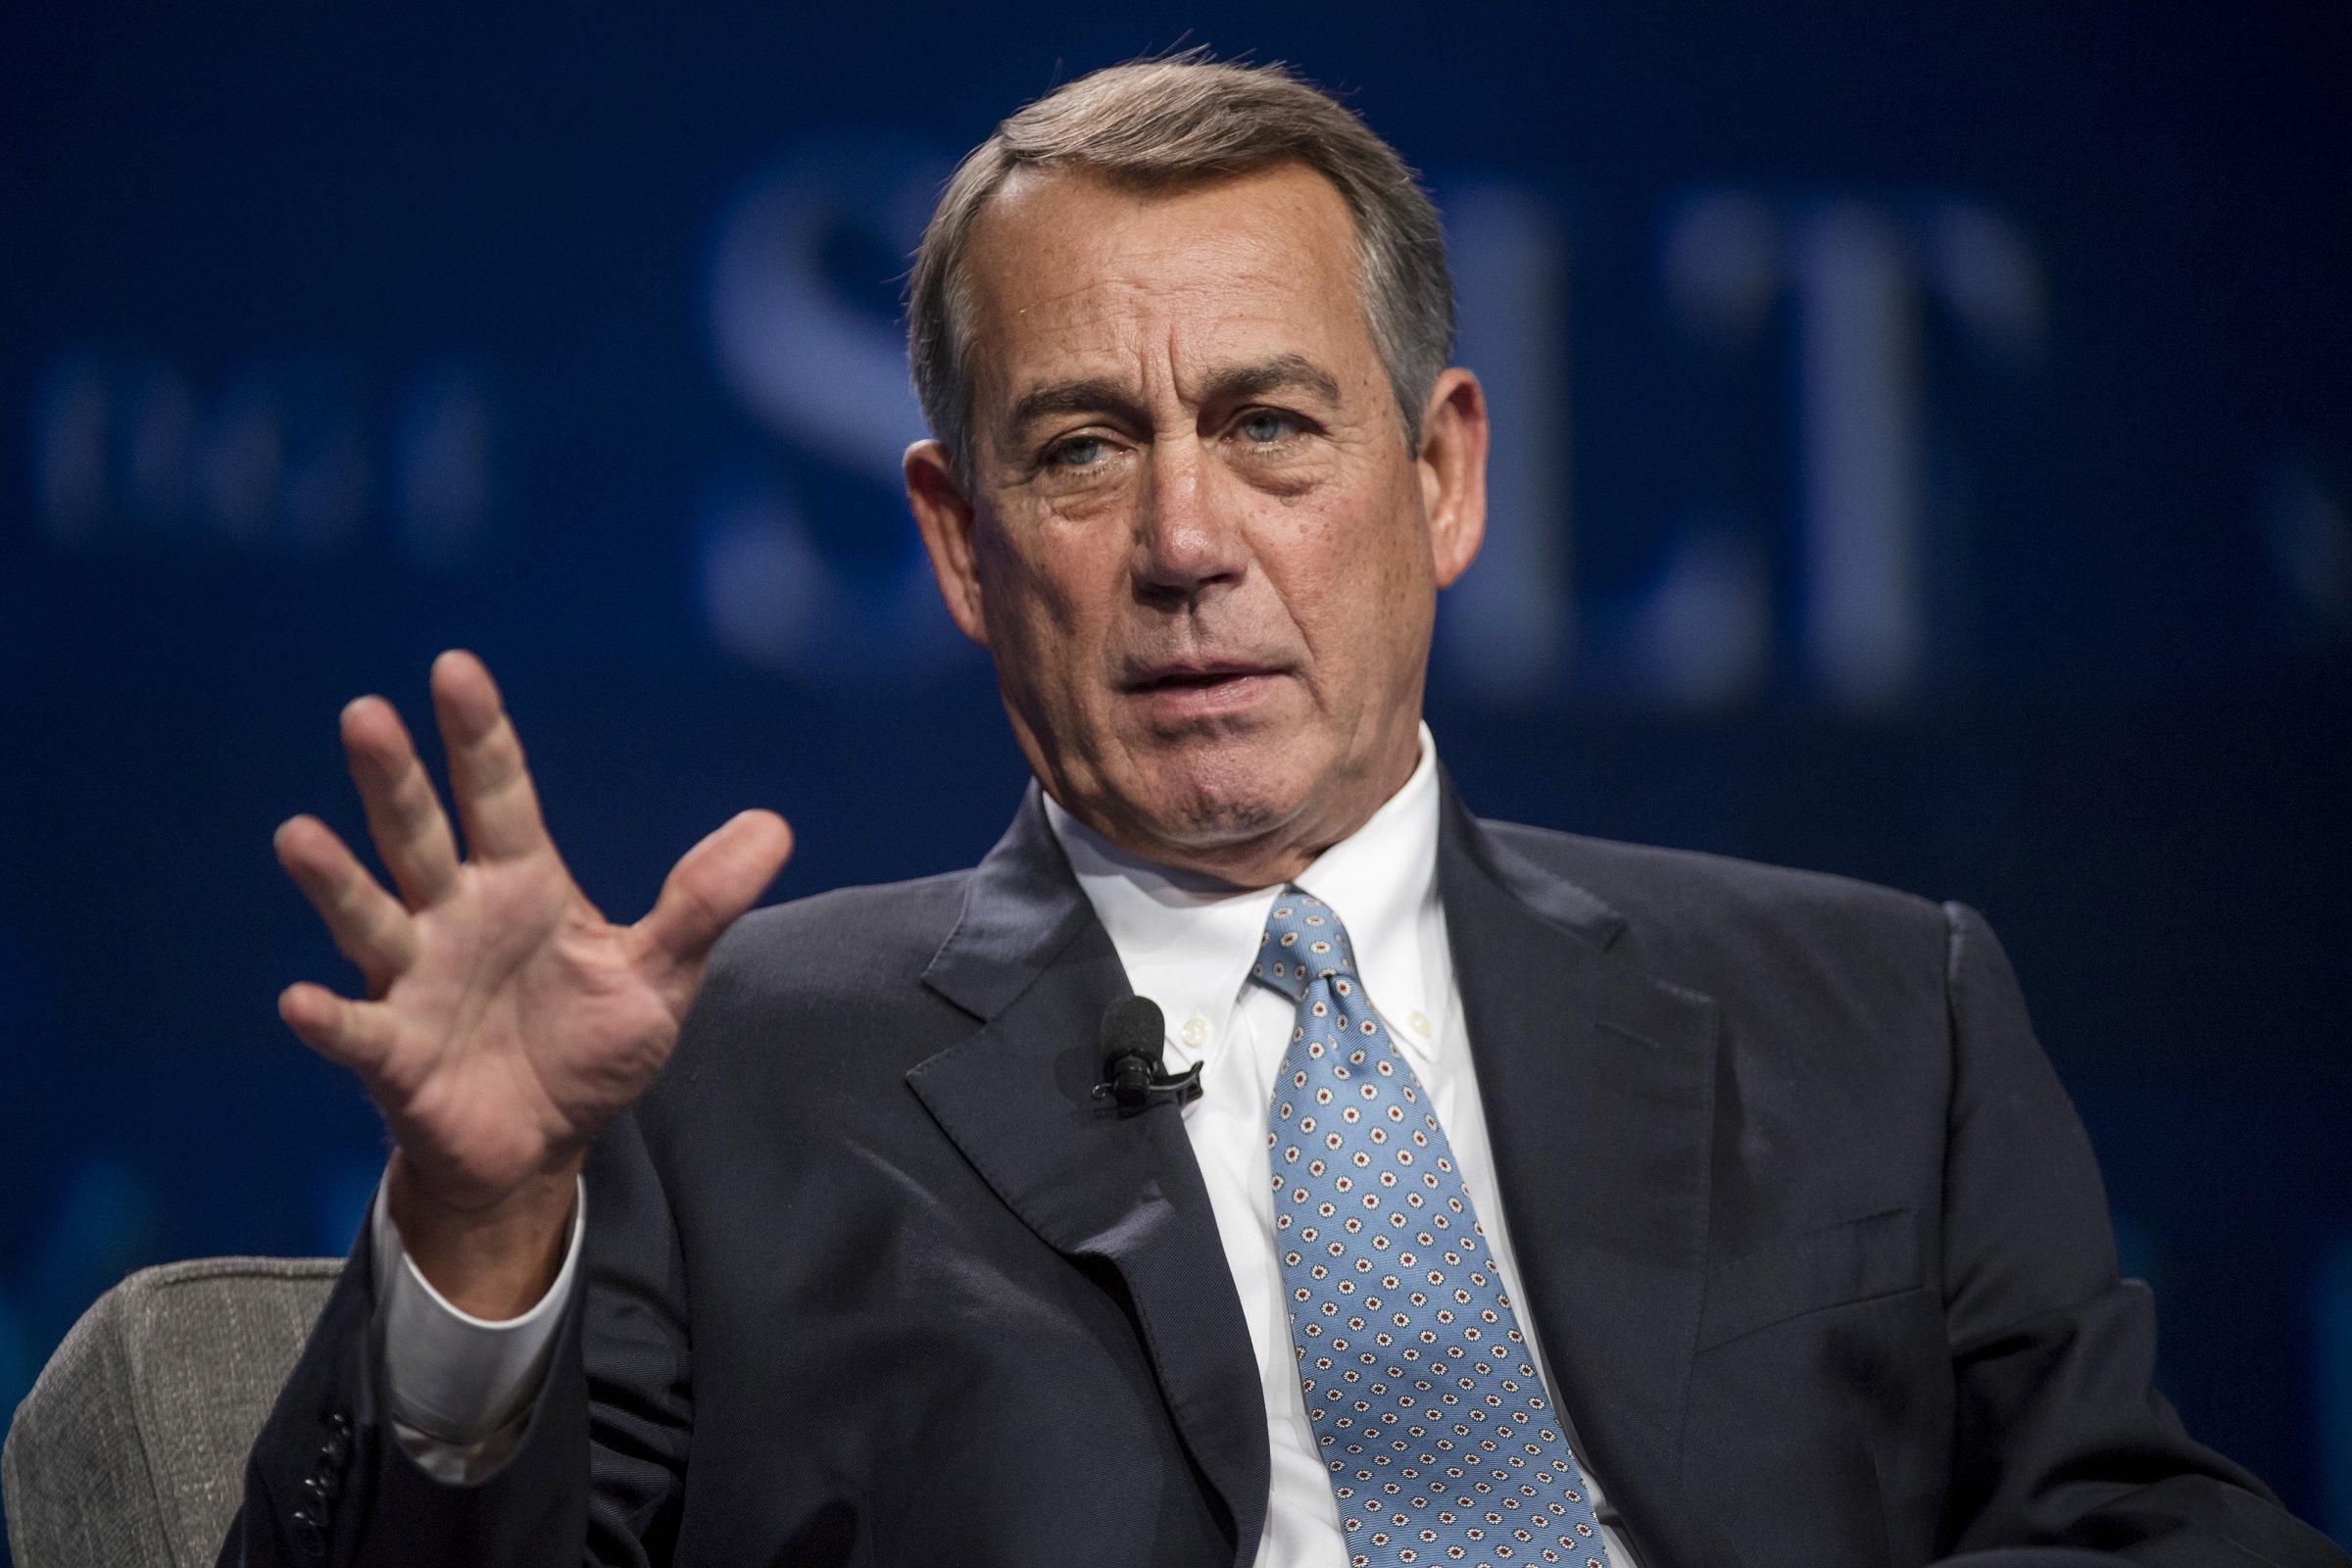 John Boehner, former U.S. House Speaker, speaks during the Skybridge Alternatives (SALT) conference in Las Vegas, Nevada, U.S., on May 12, 2016.